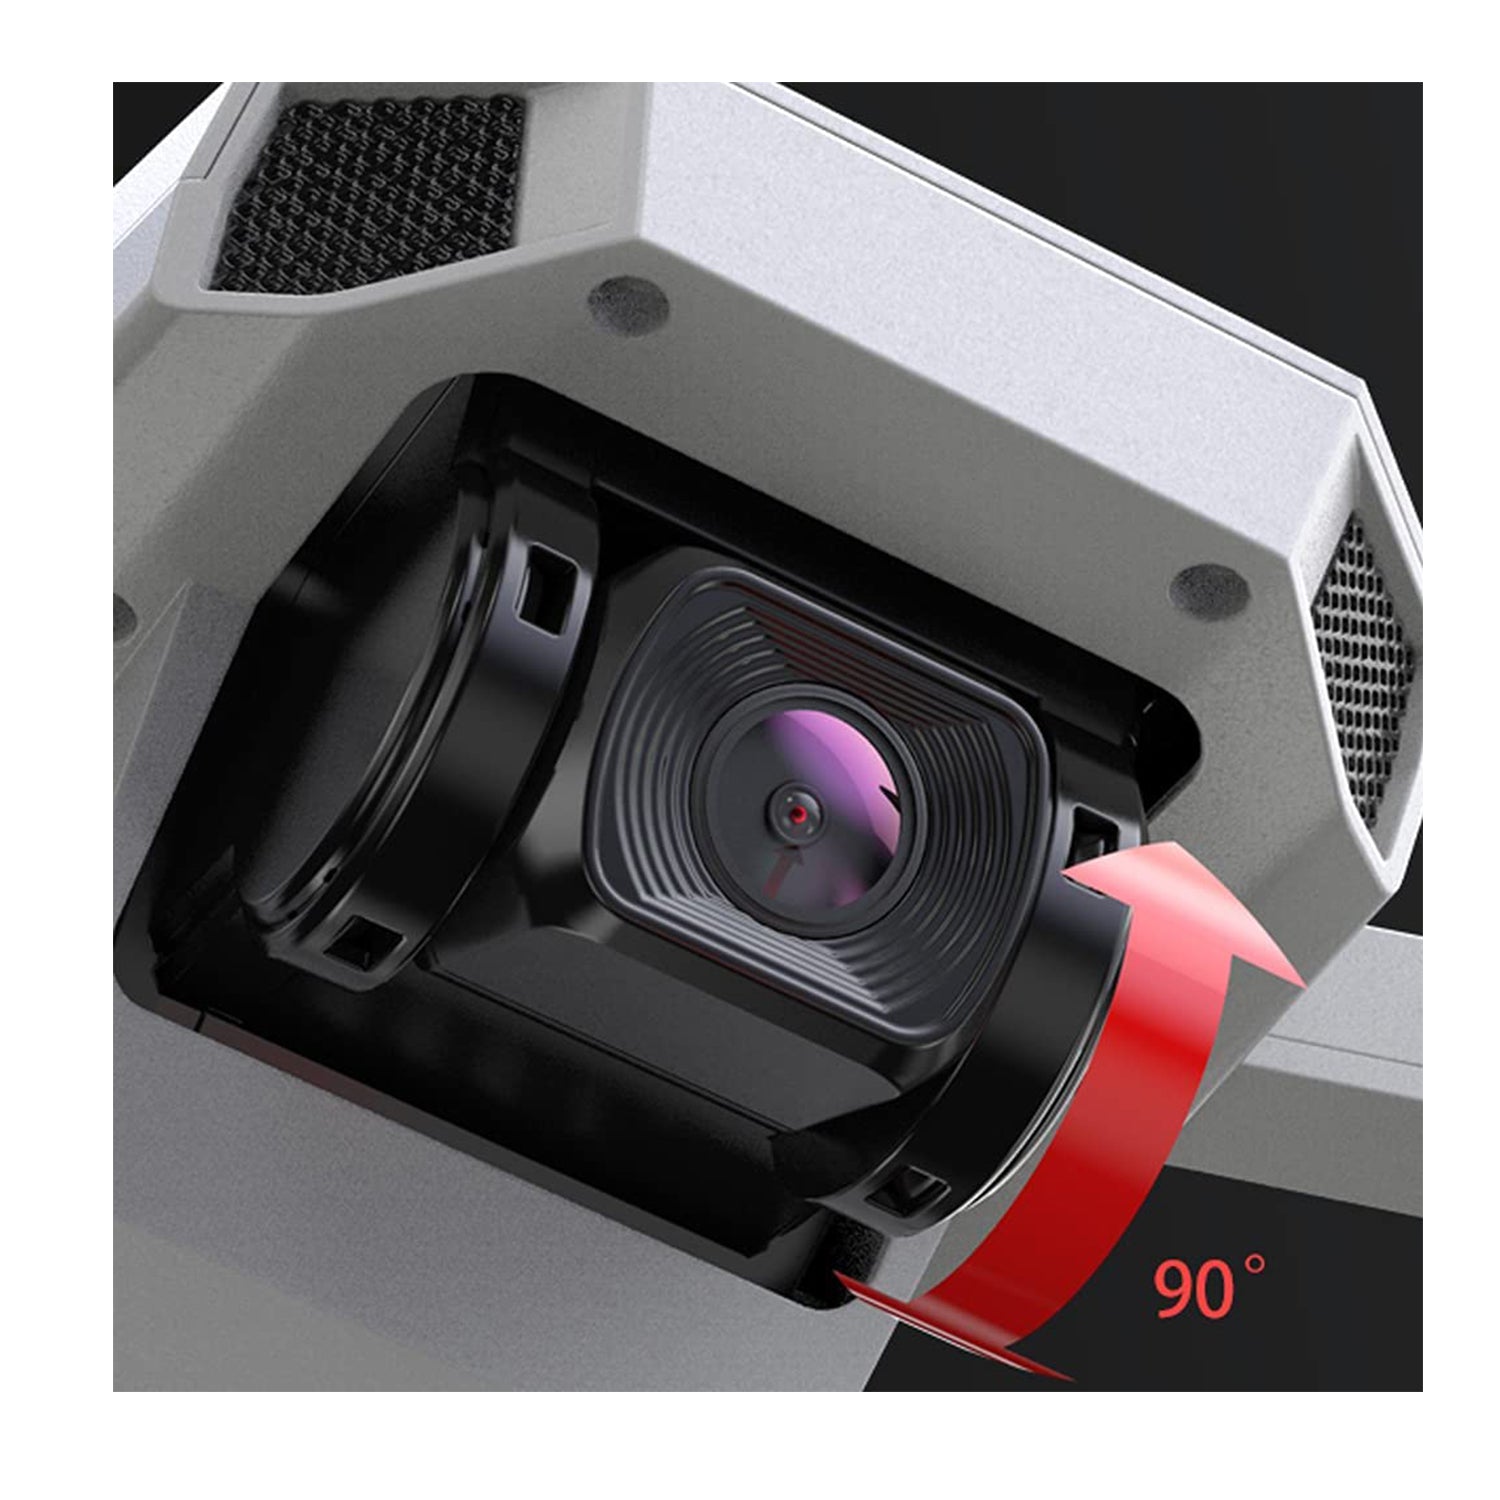 Contixo F31 Pocket Drone with 4k Camera